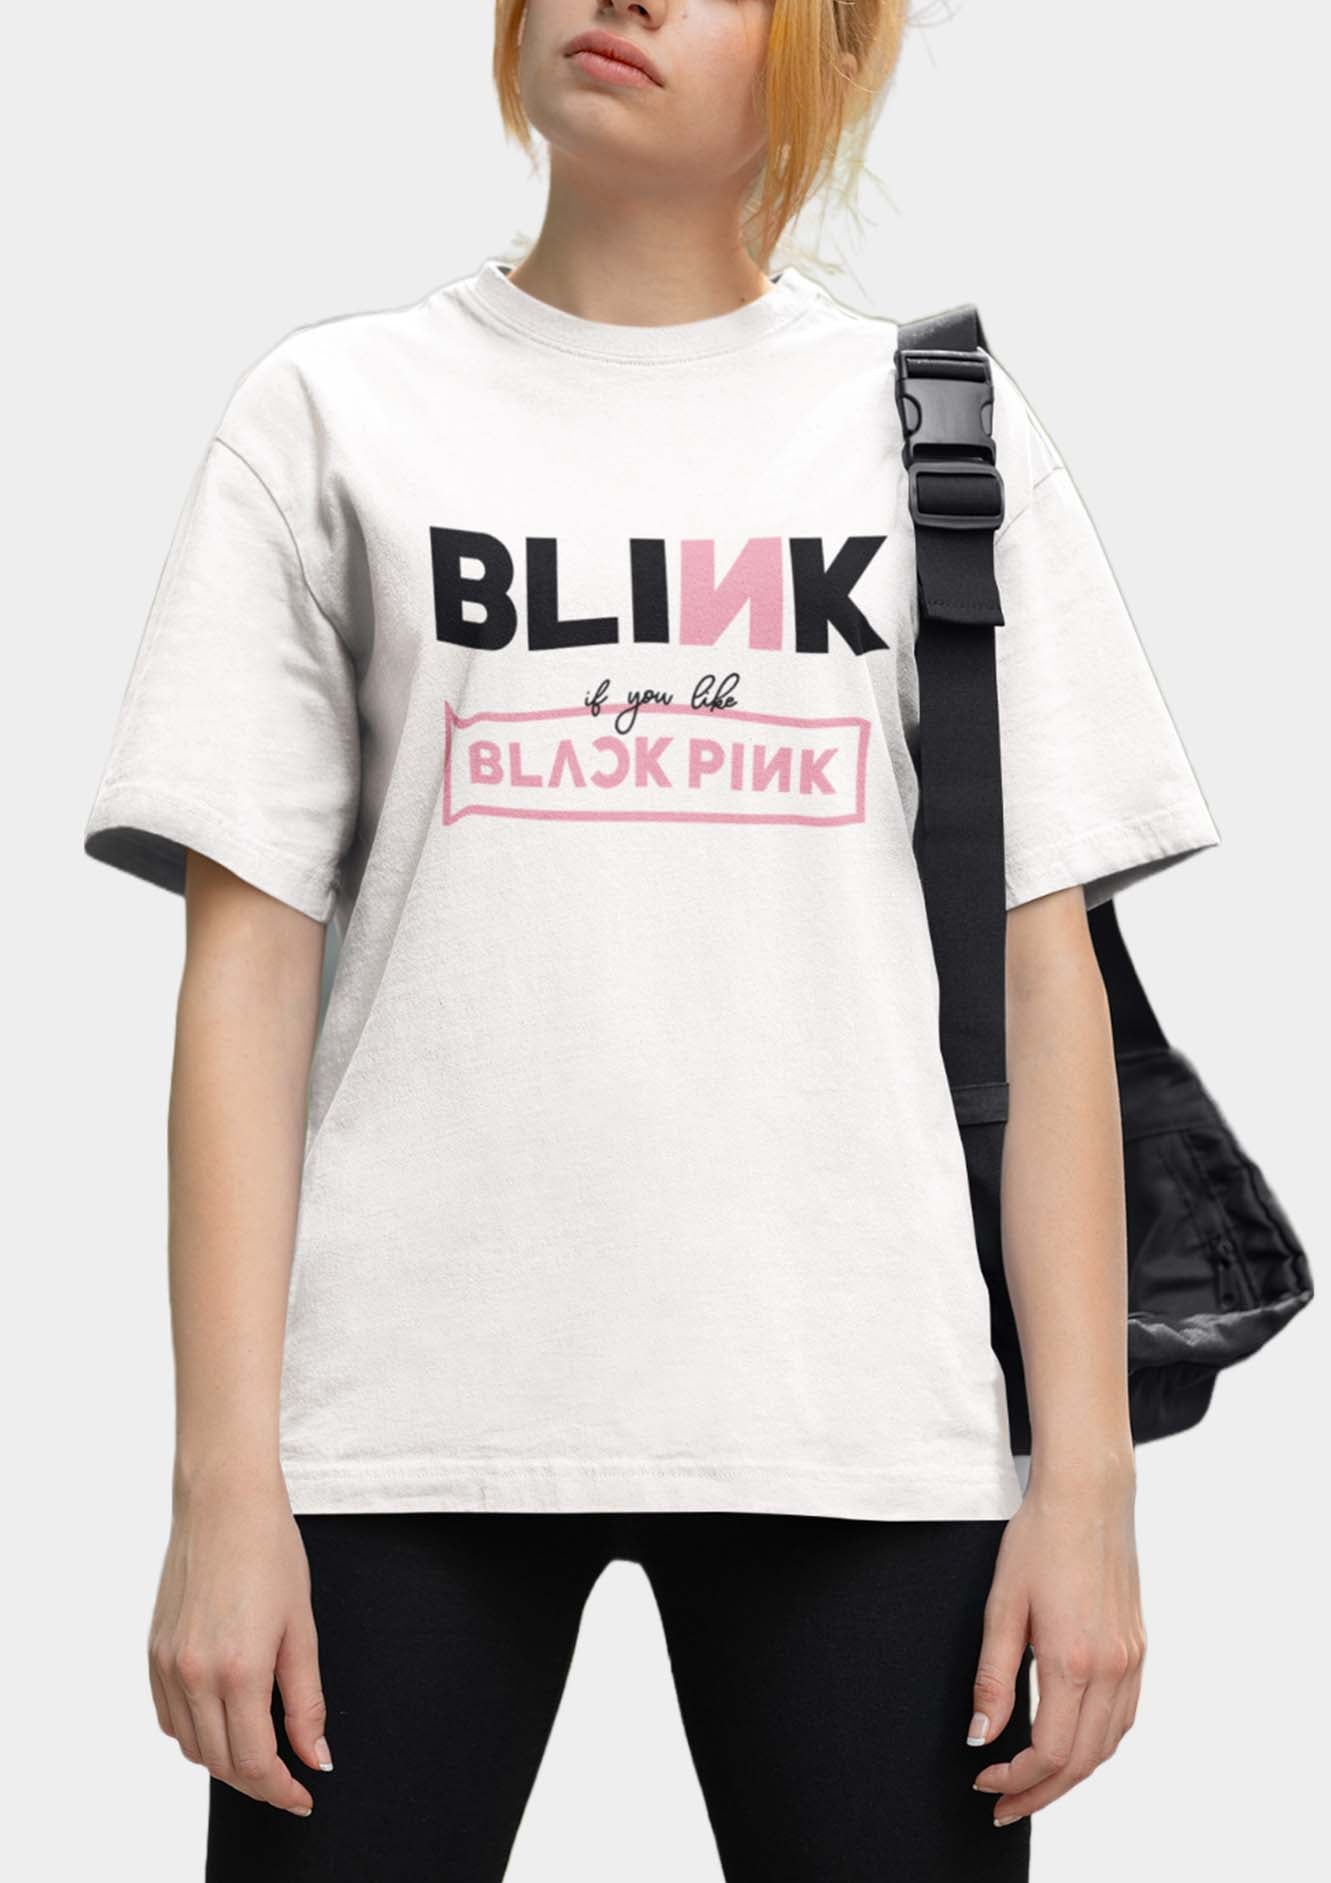 Blackpink Blink Unisex Tshirt